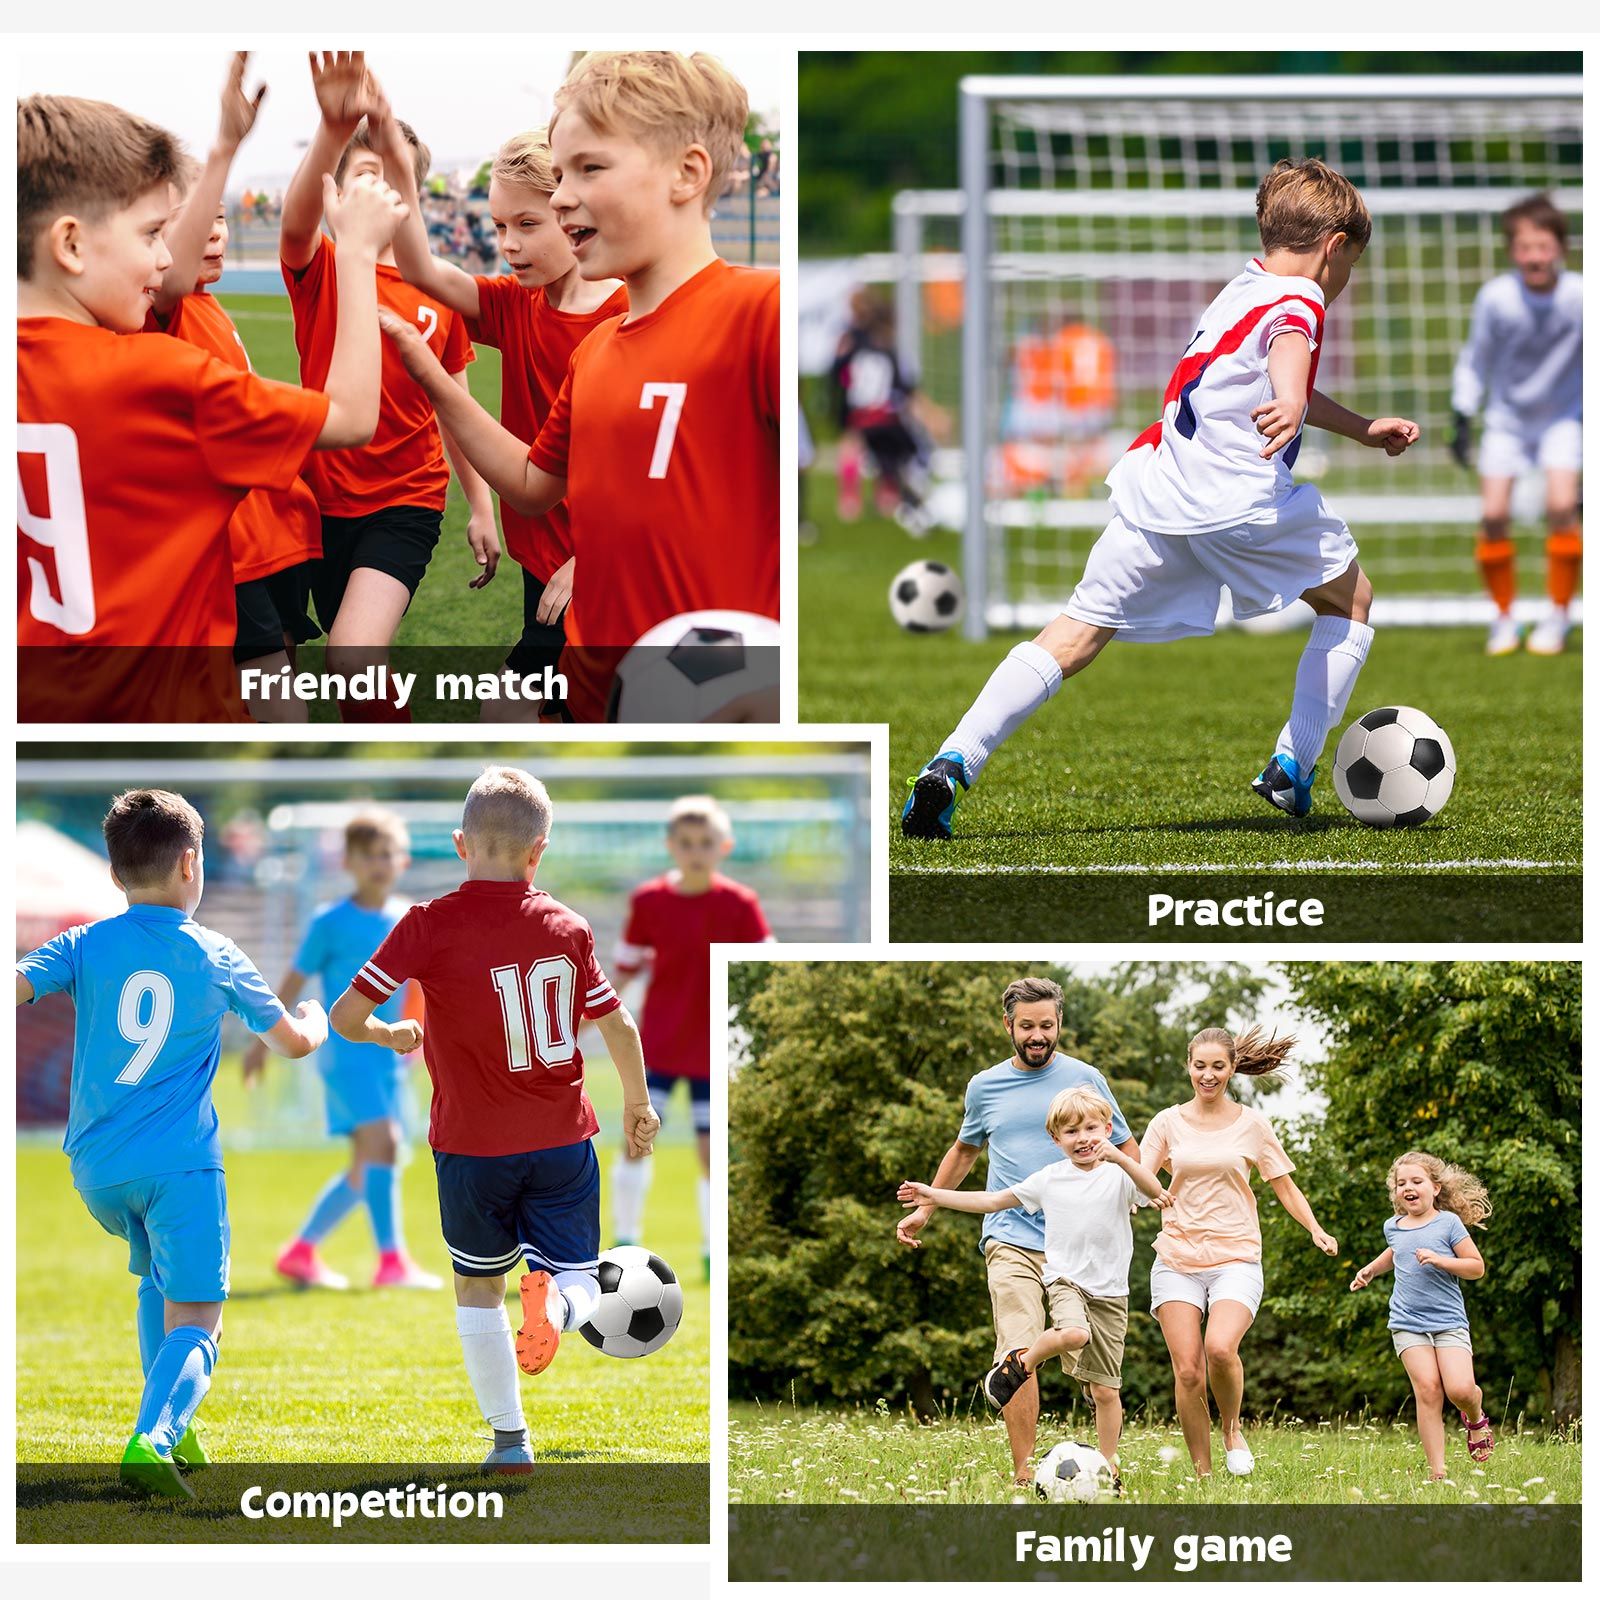 Soccer Goal Set Football Net Metal Frame Backyard Training Practice Kids Adults Youth Home Outdoor Sports Games Match 2.4x1.52m